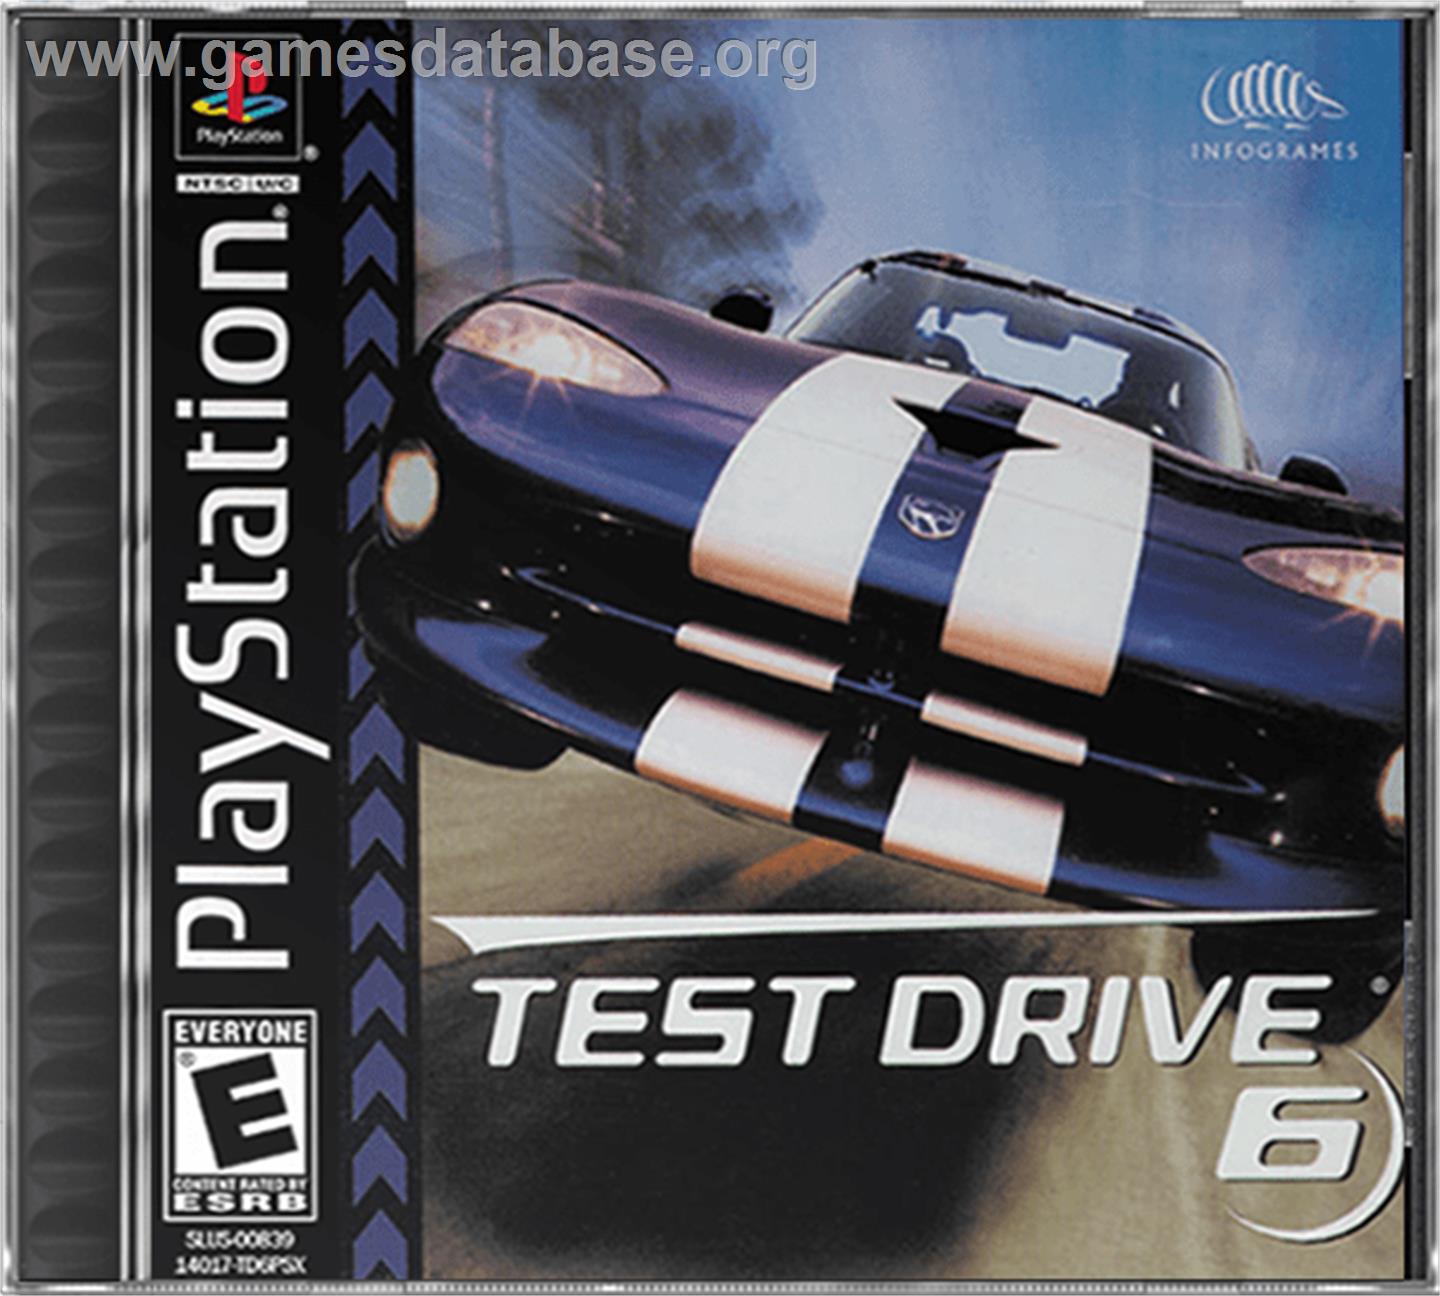 Test Drive 6 - Sony Playstation - Artwork - Box